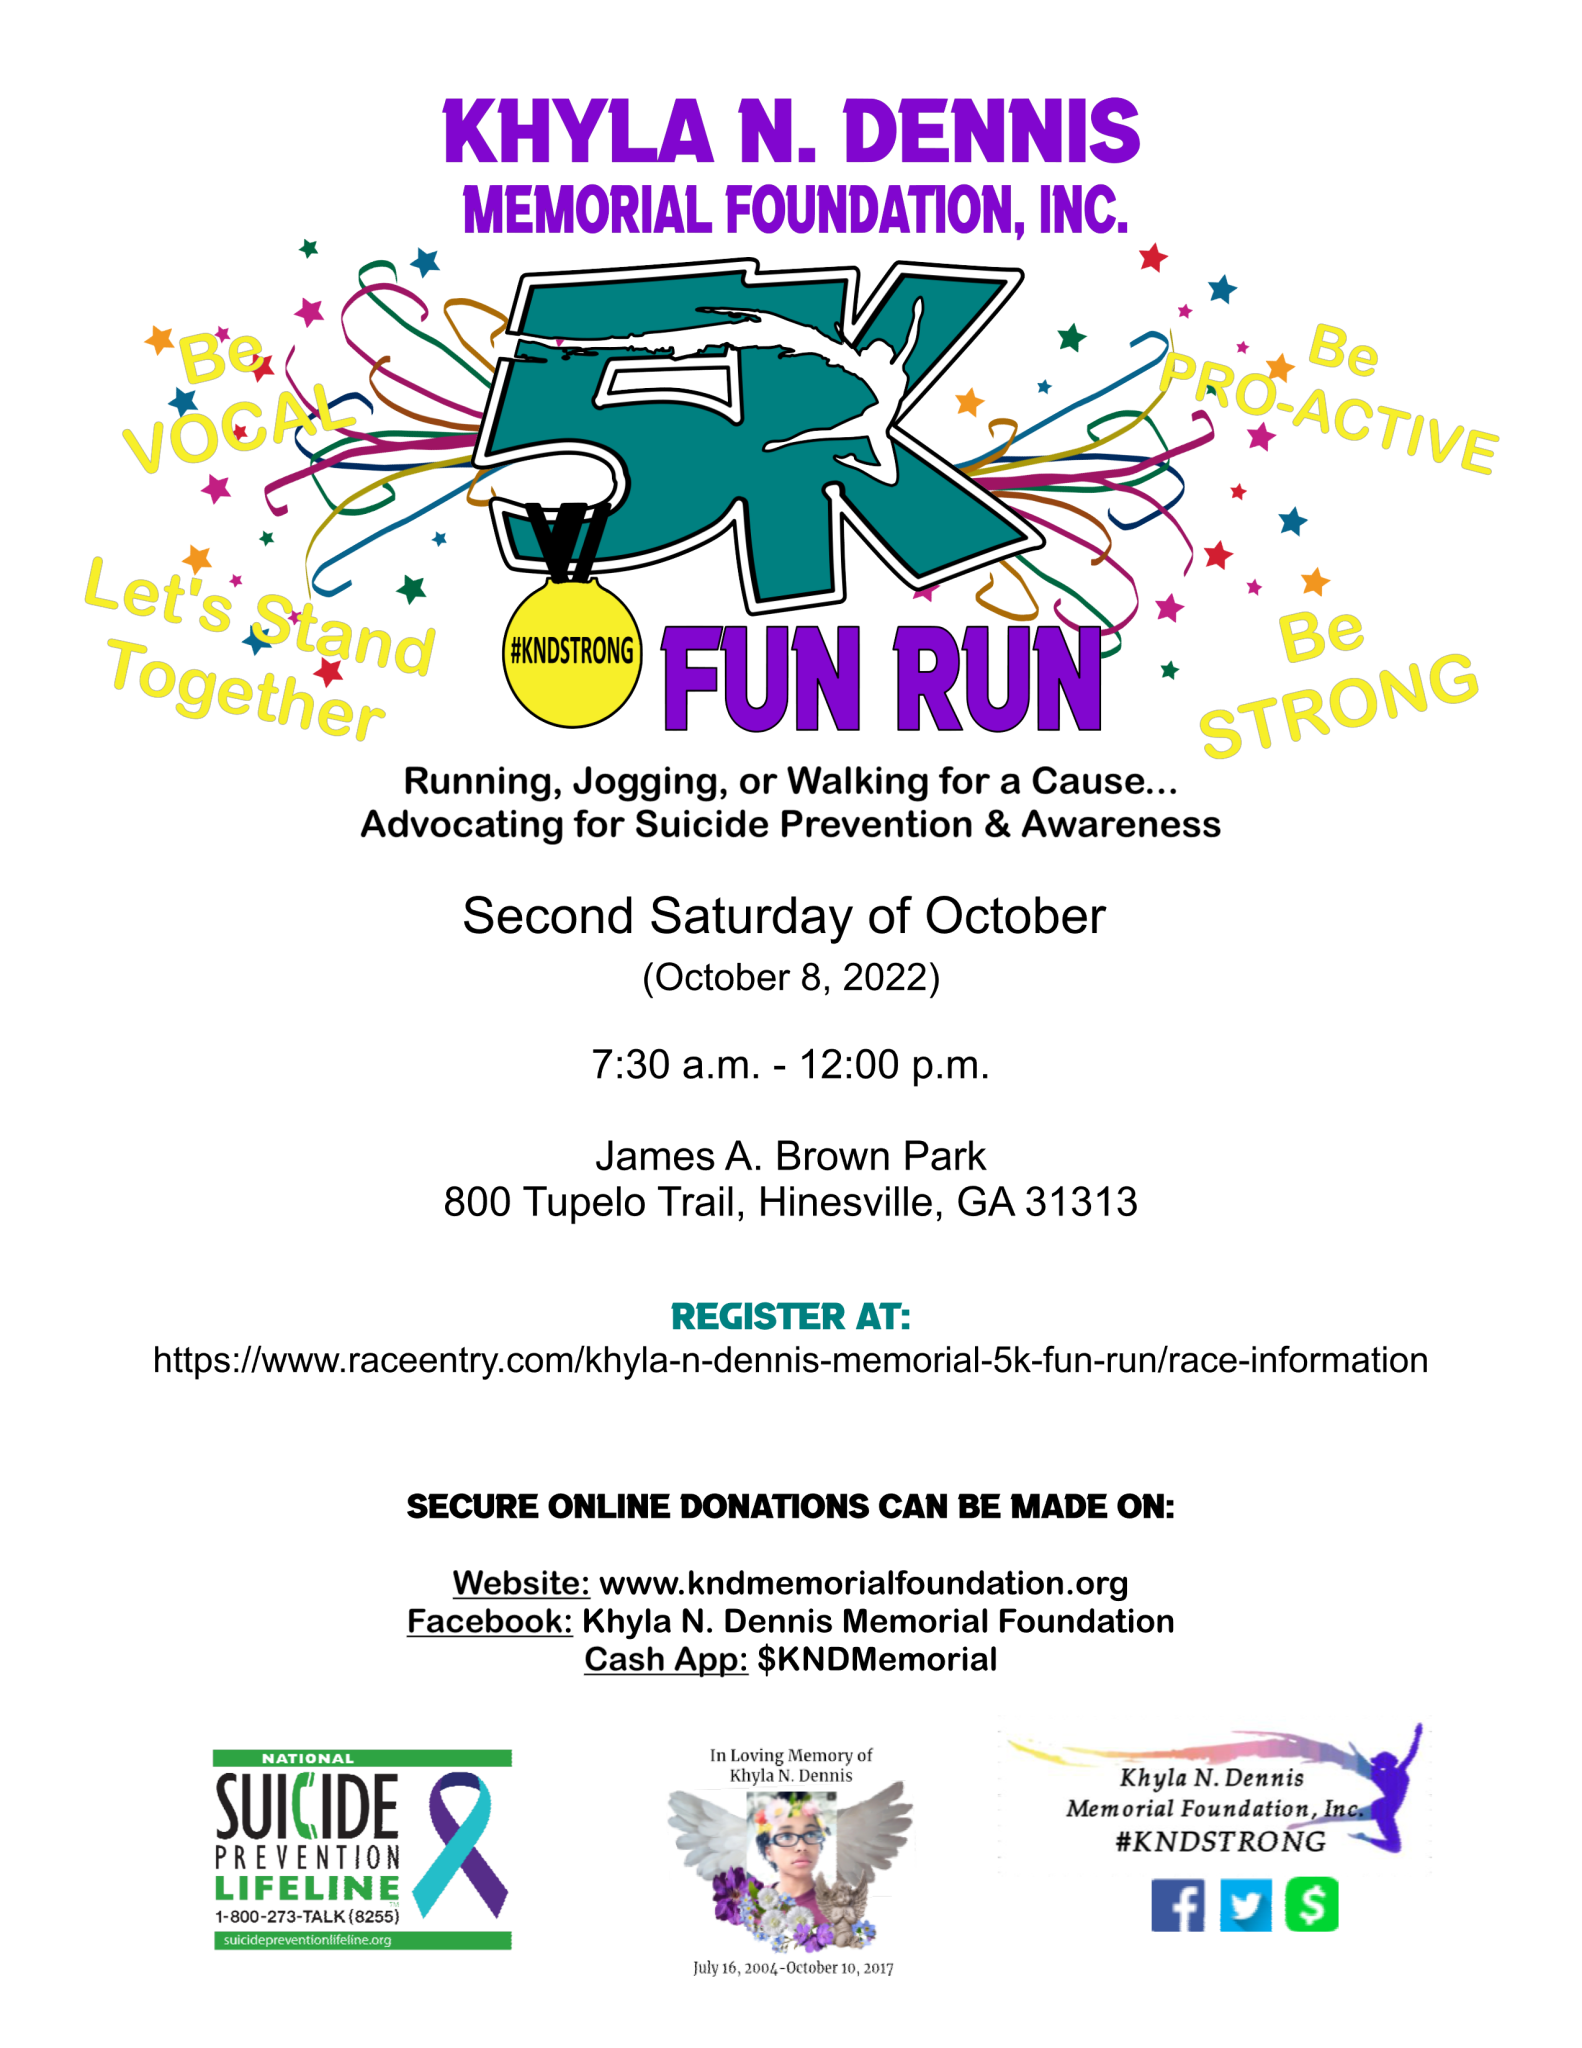 Flyer for Khyla N. Dennis Memorial Foundation 5K Run